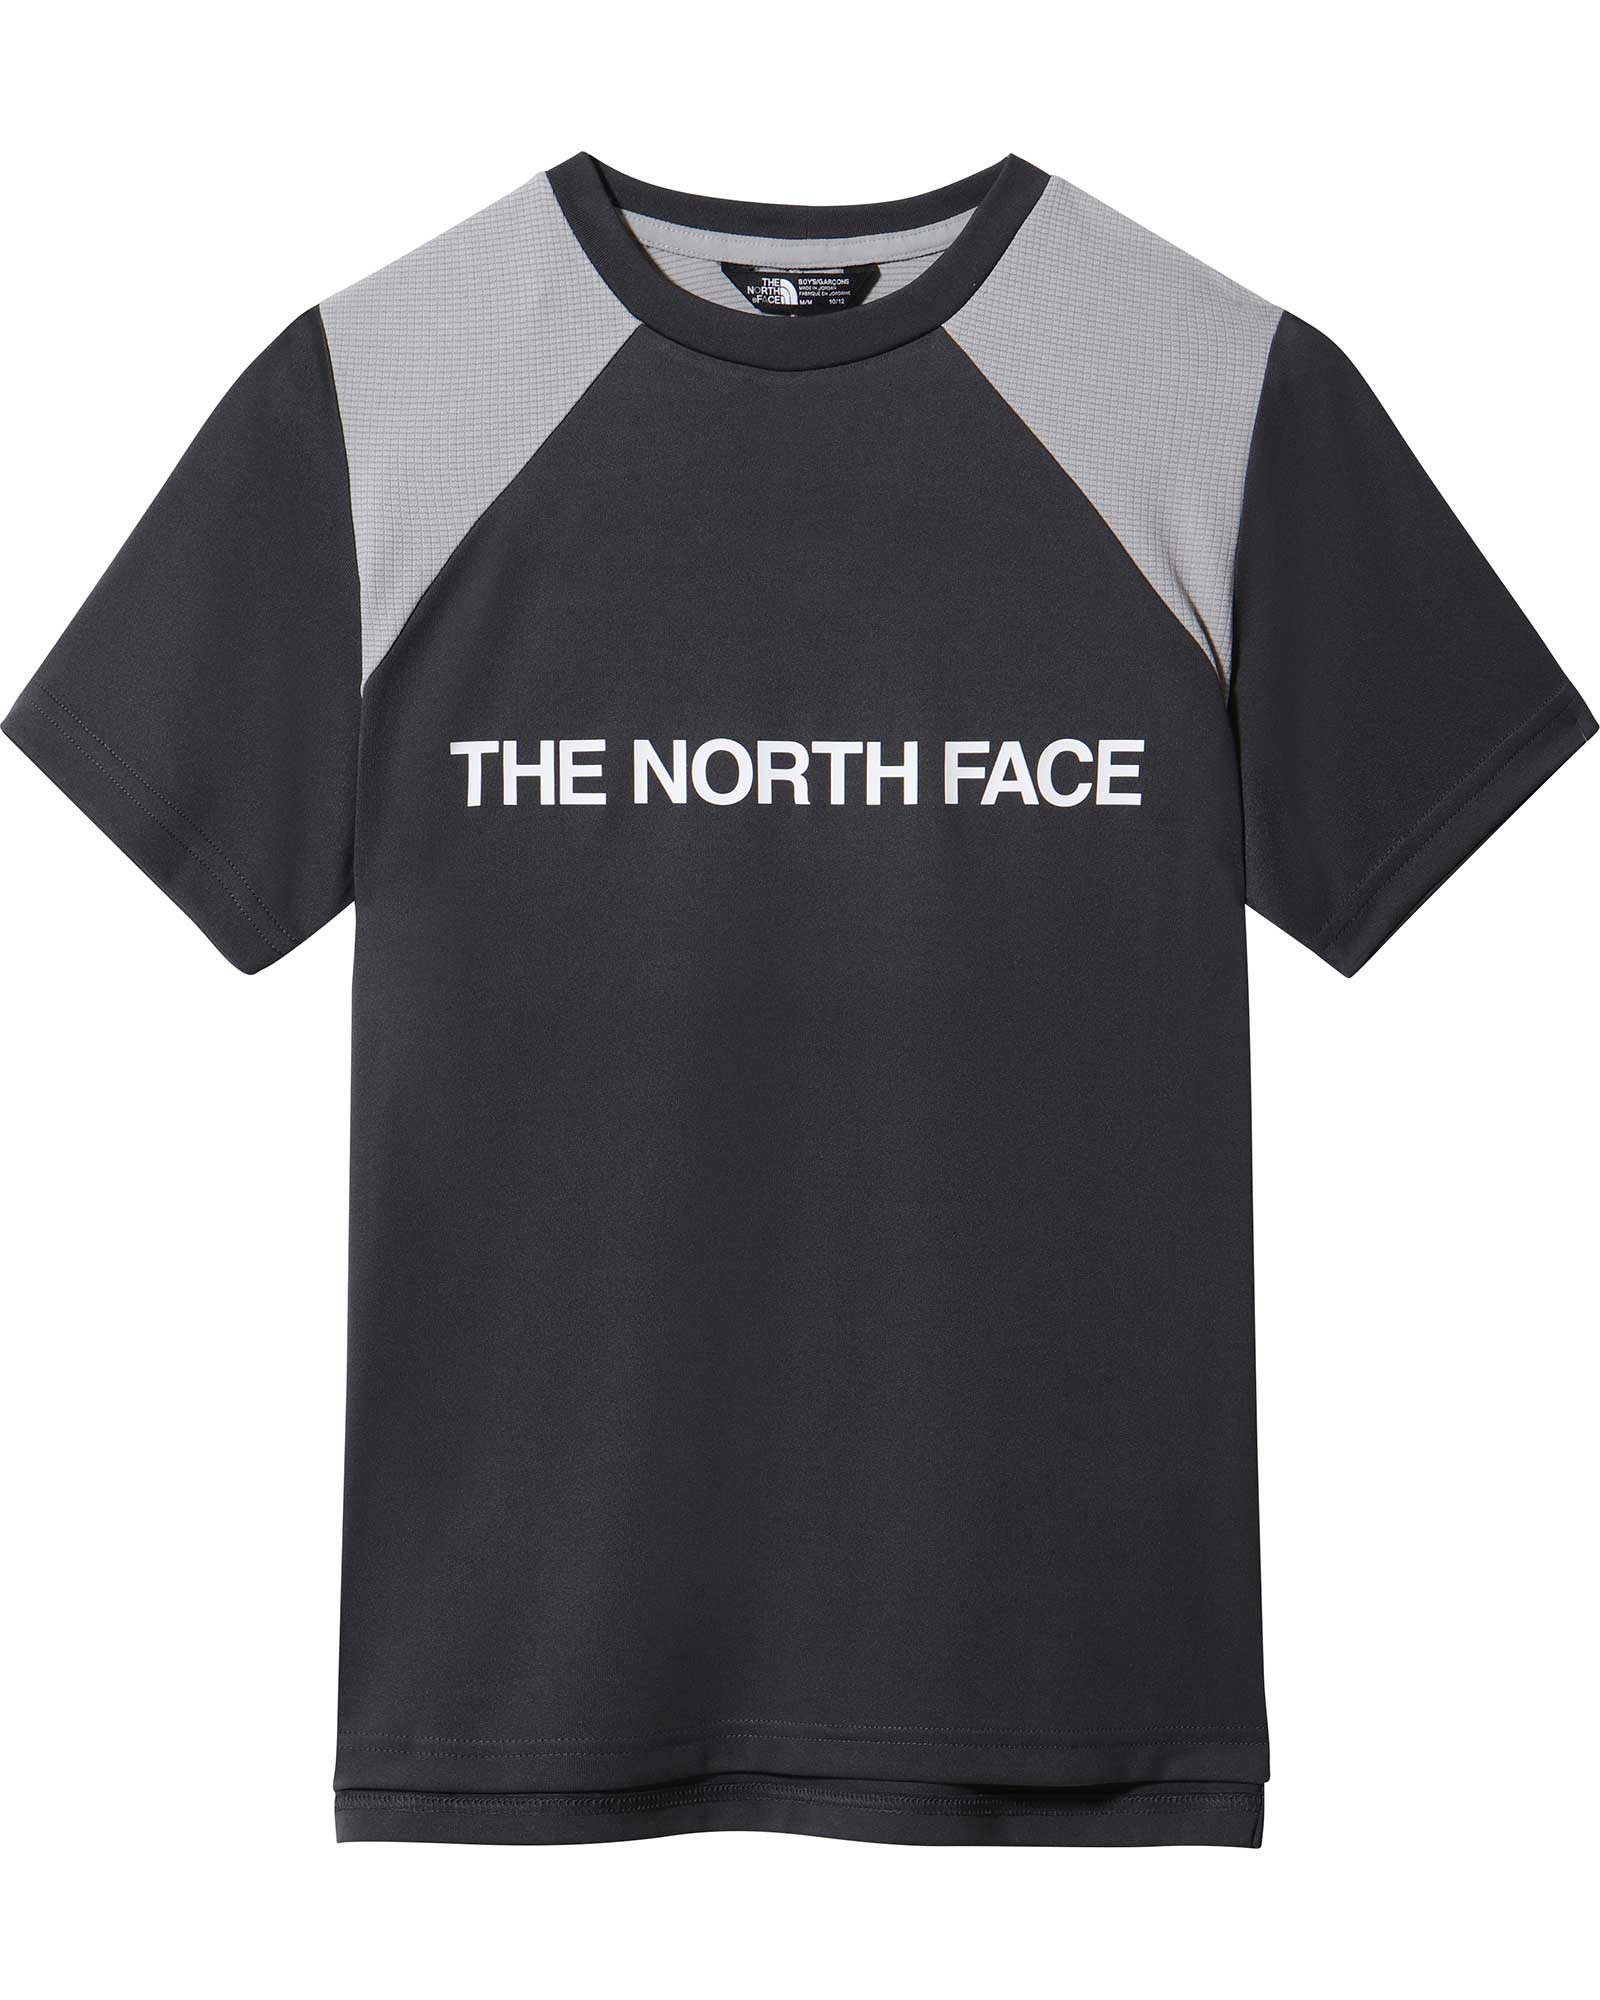 The North Face Never Stop Boys’ T Shirt - Asphalt Grey S